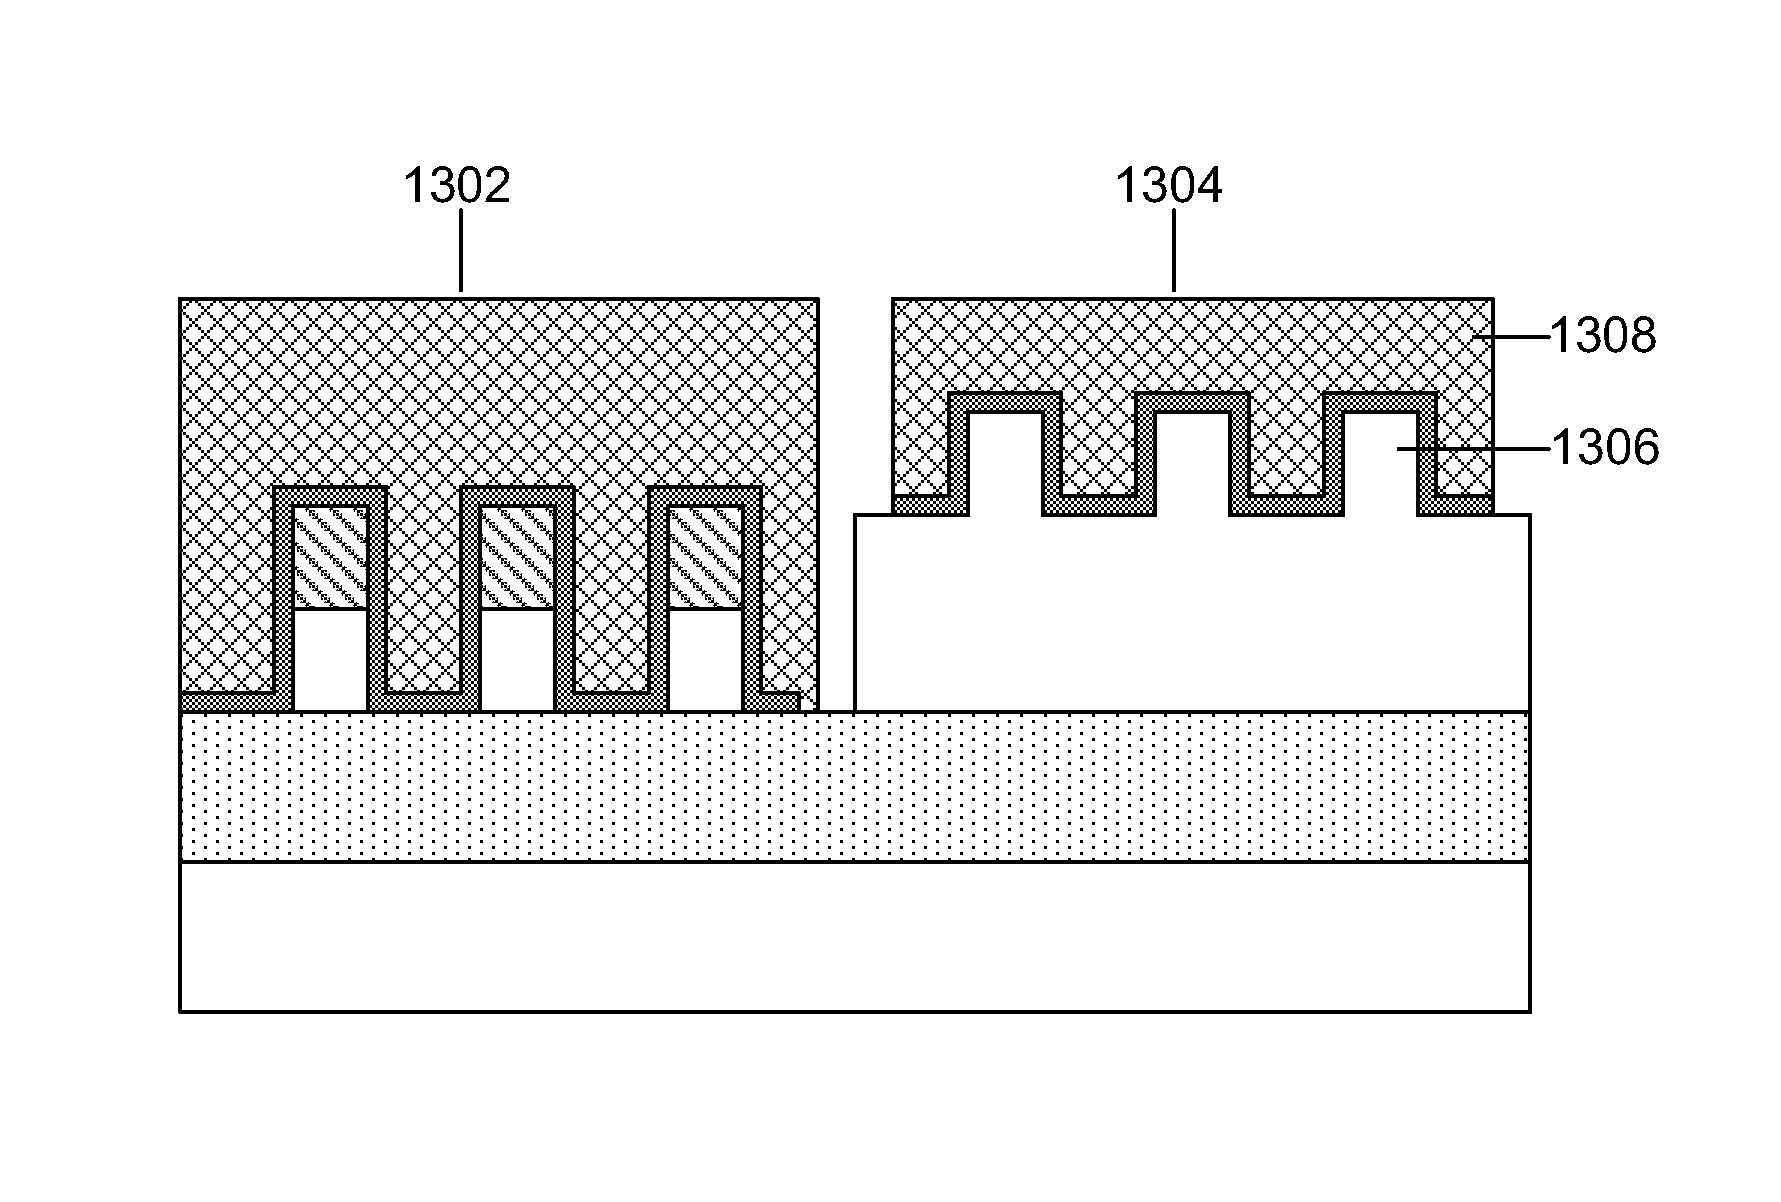 MOS capacitors with a finfet process